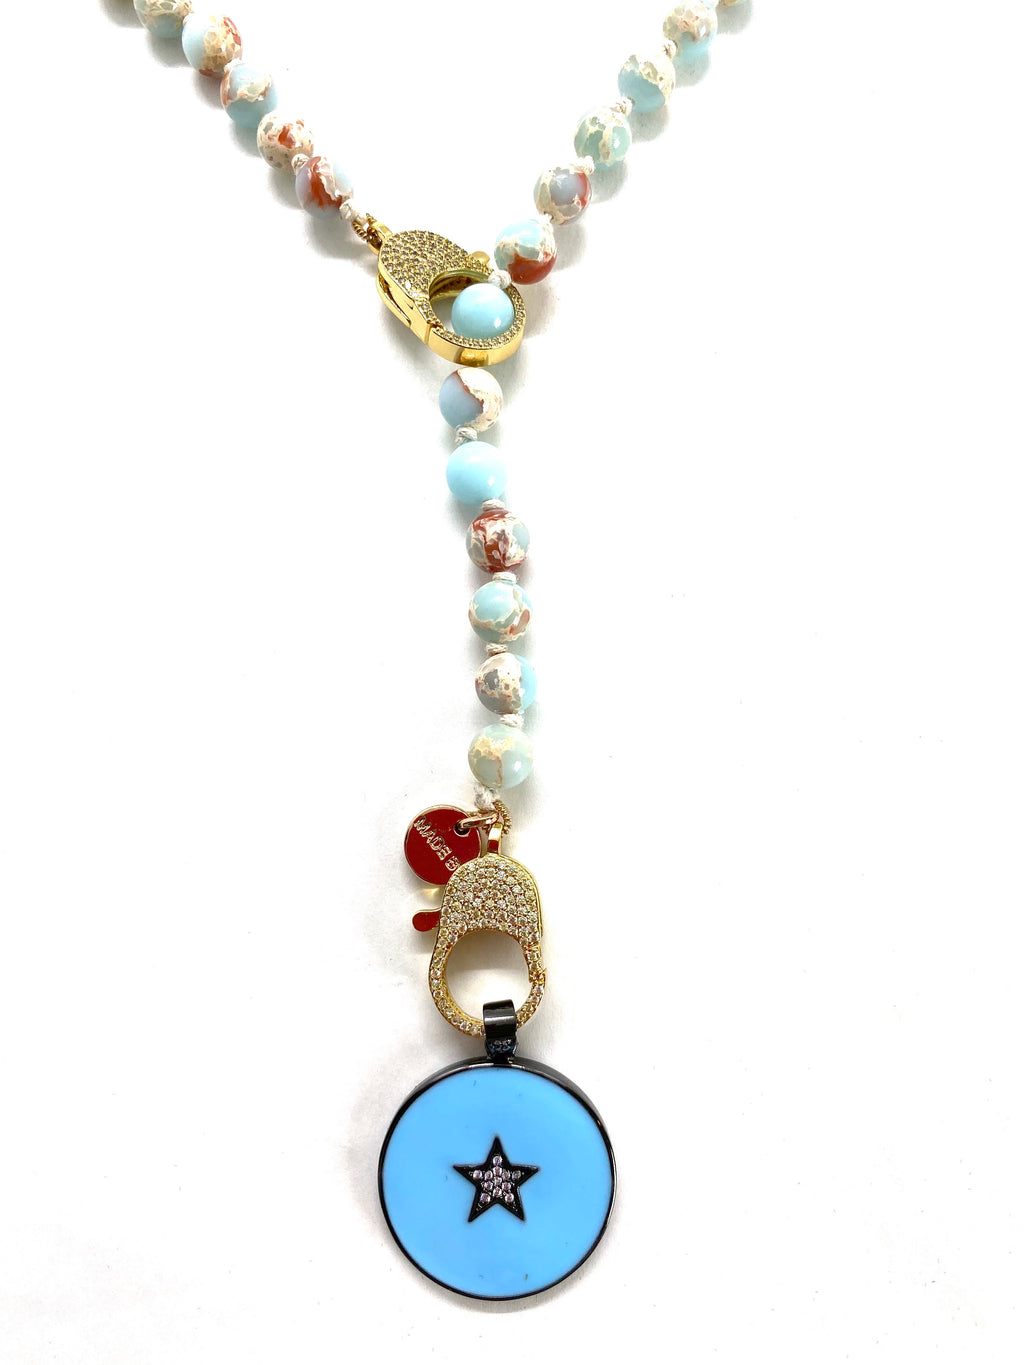 Aqua Gaia necklace, with round blue star pendant, gold zirconia clips